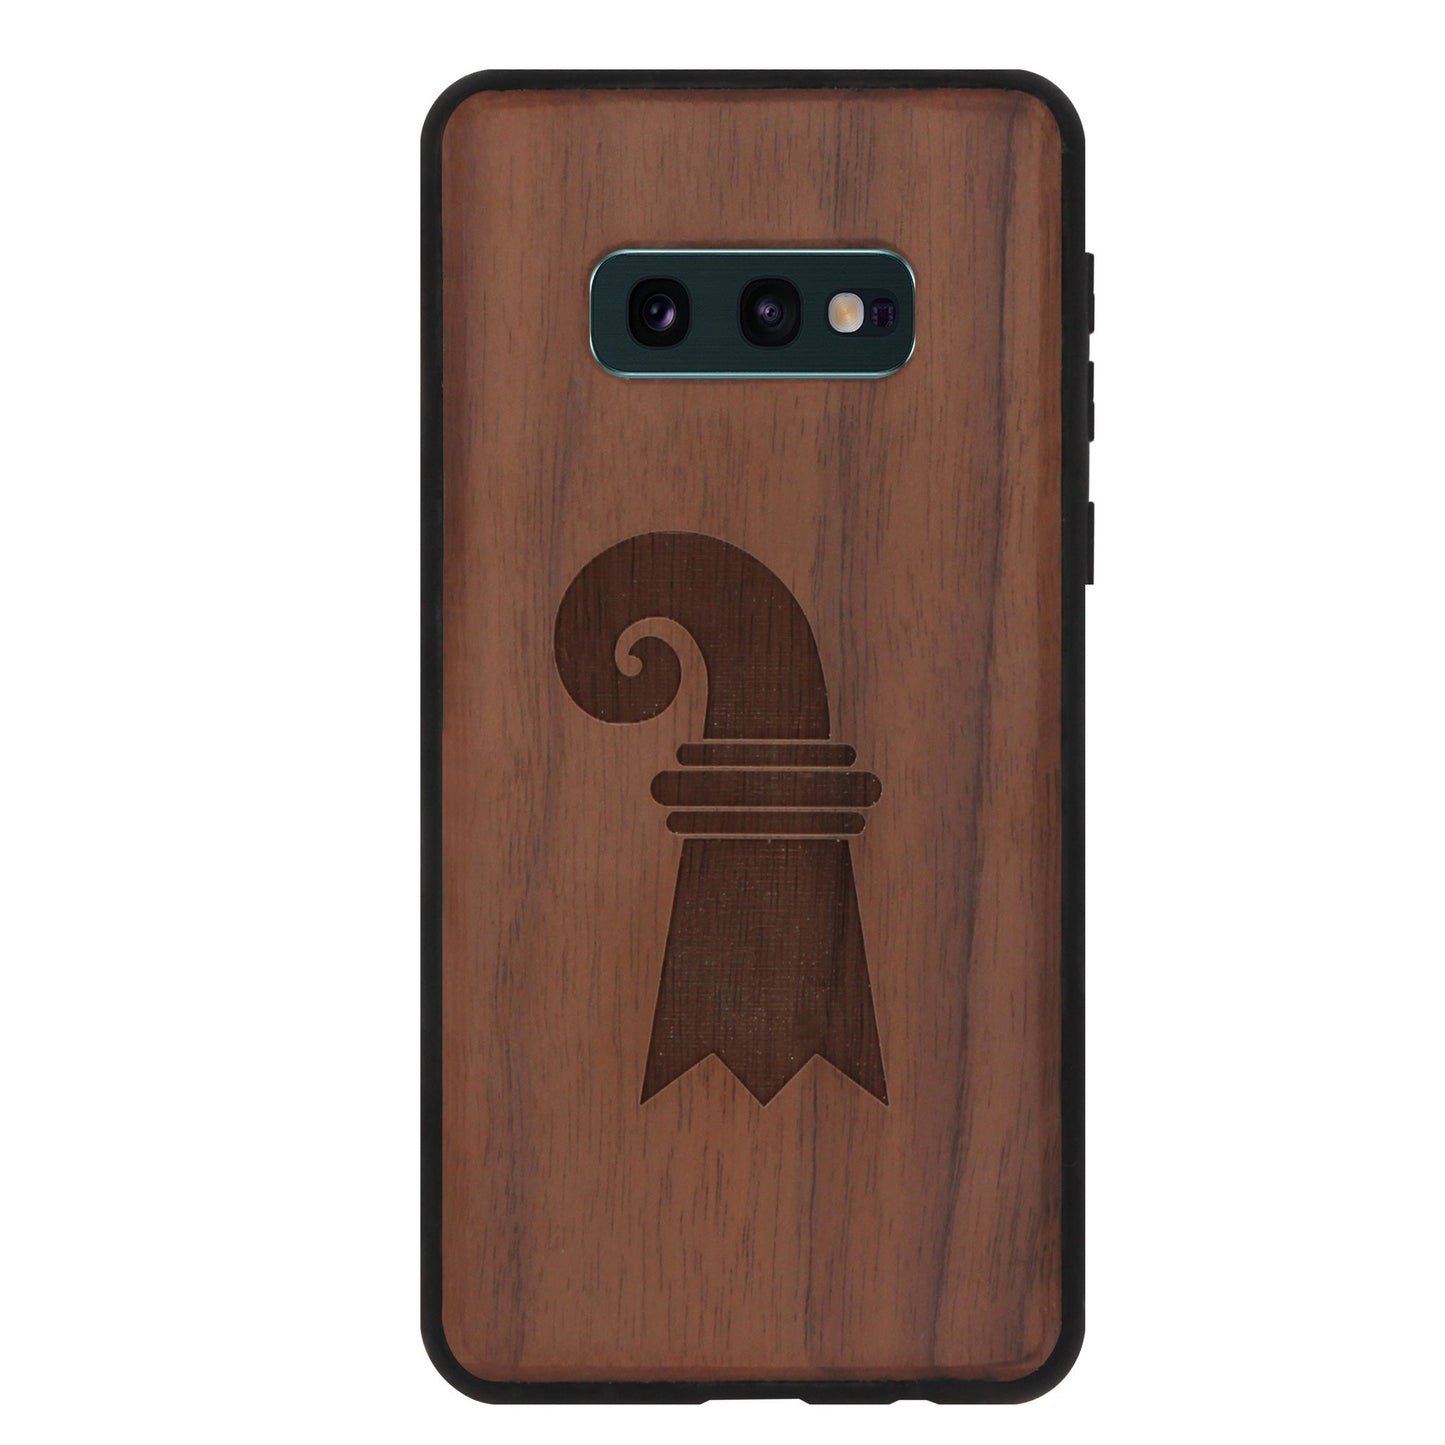 Baslerstab Eden case made of walnut wood for Samsung Galaxy S10E